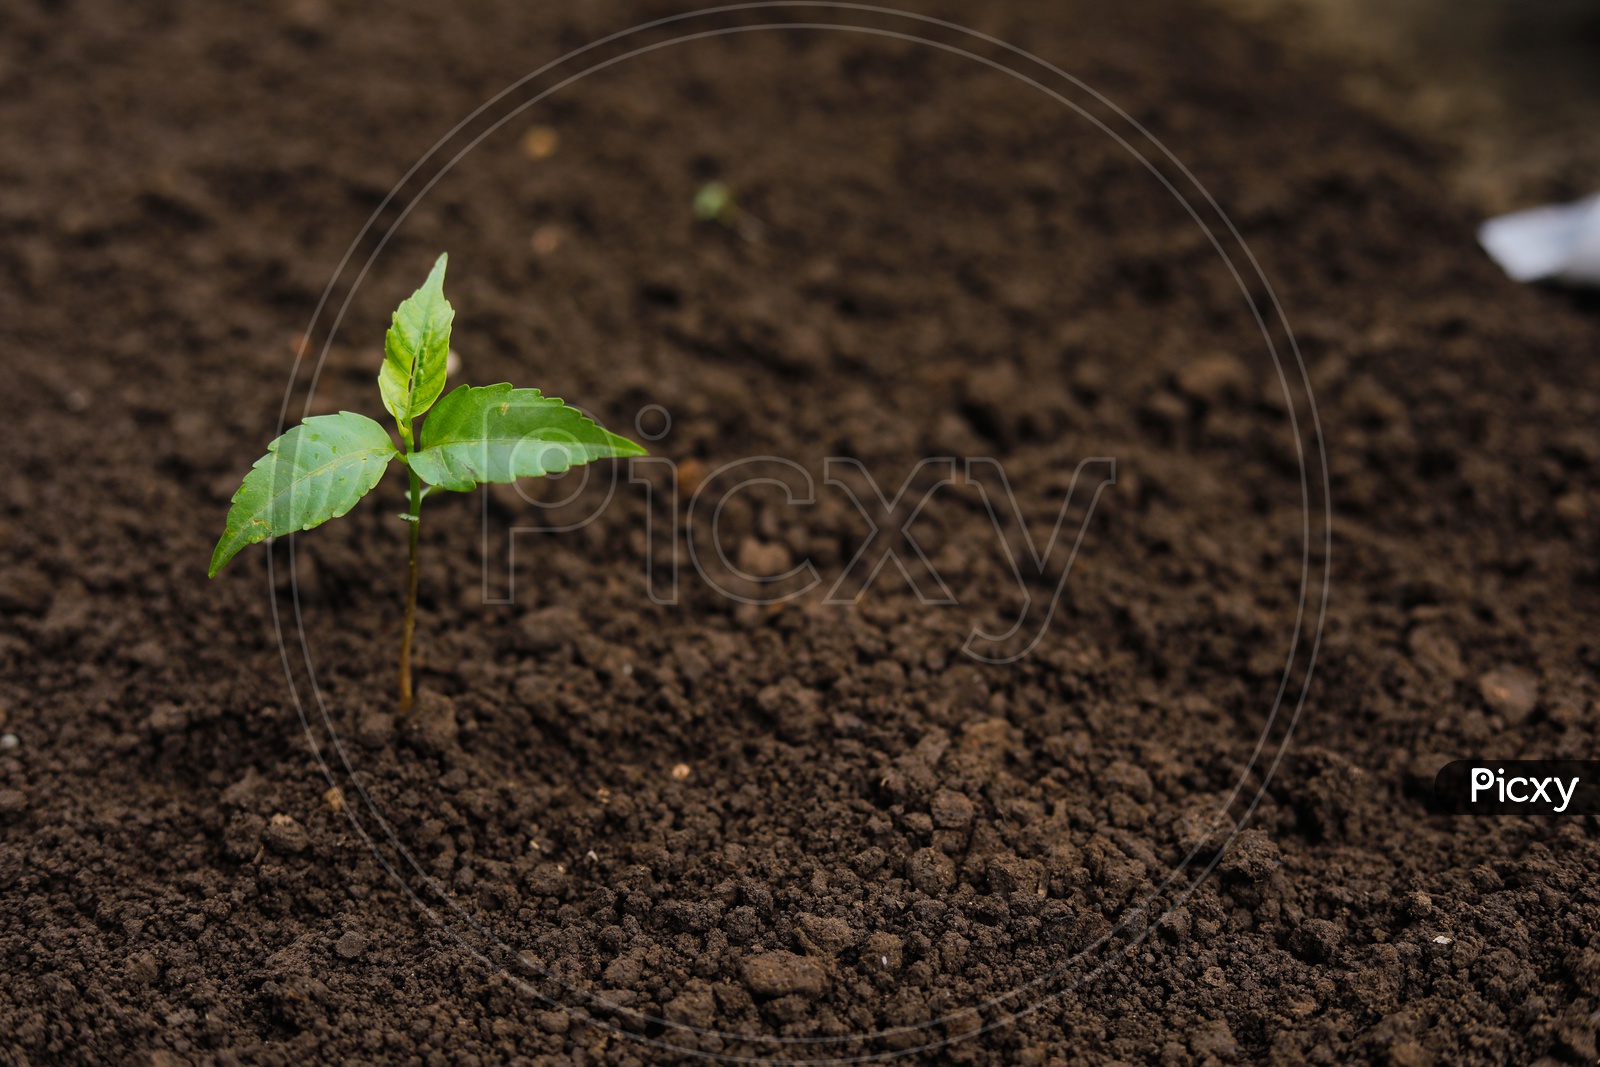 Neem Plant Sapling Closeup Shot over a Soil